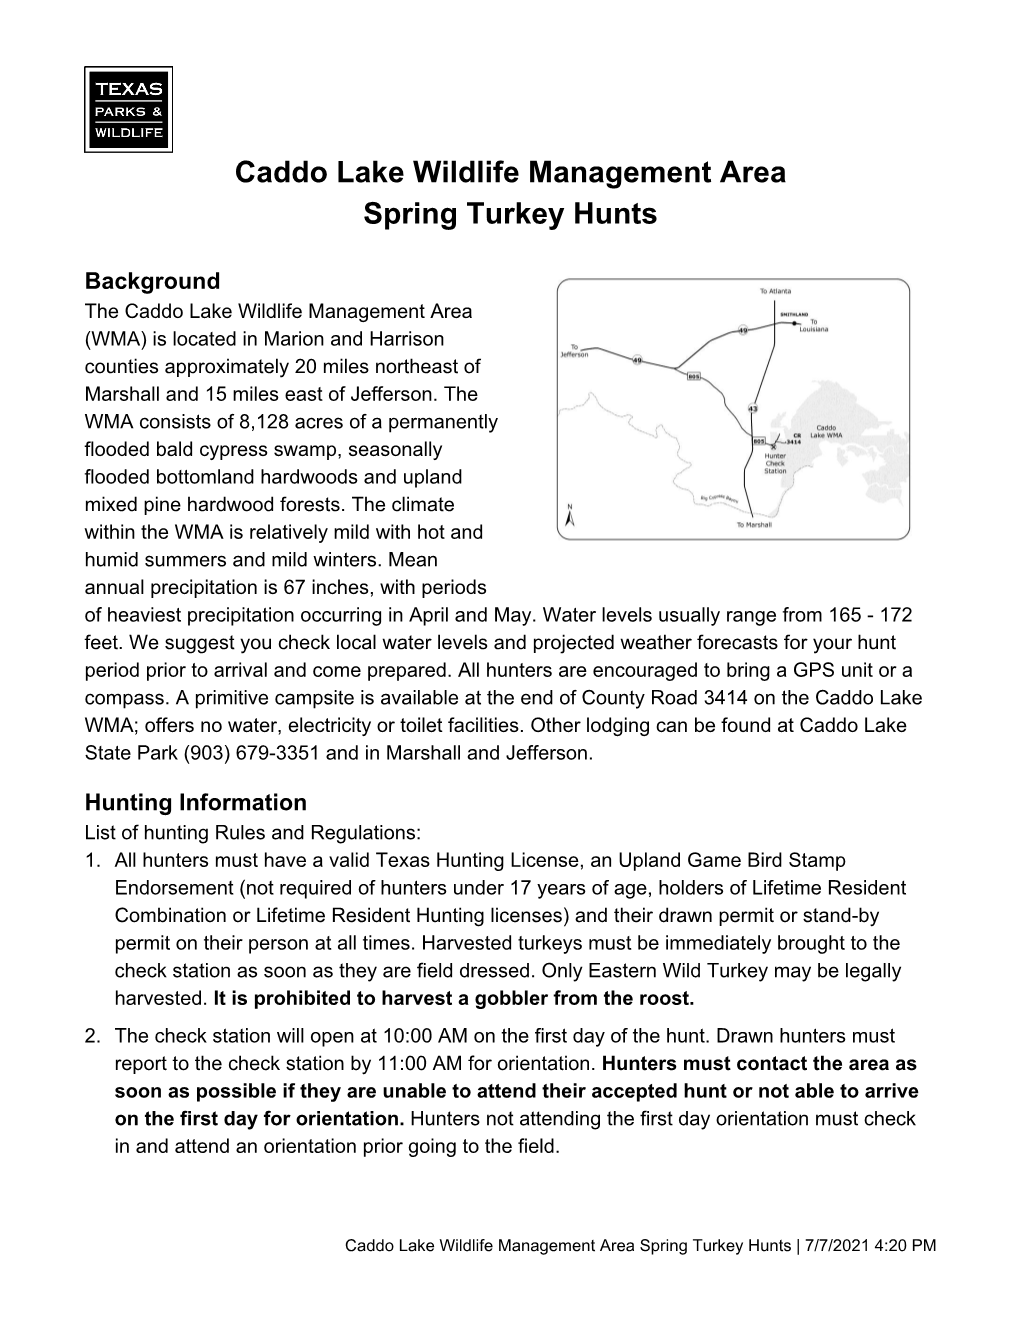 Caddo Lake Wildlife Management Area Spring Turkey Hunts